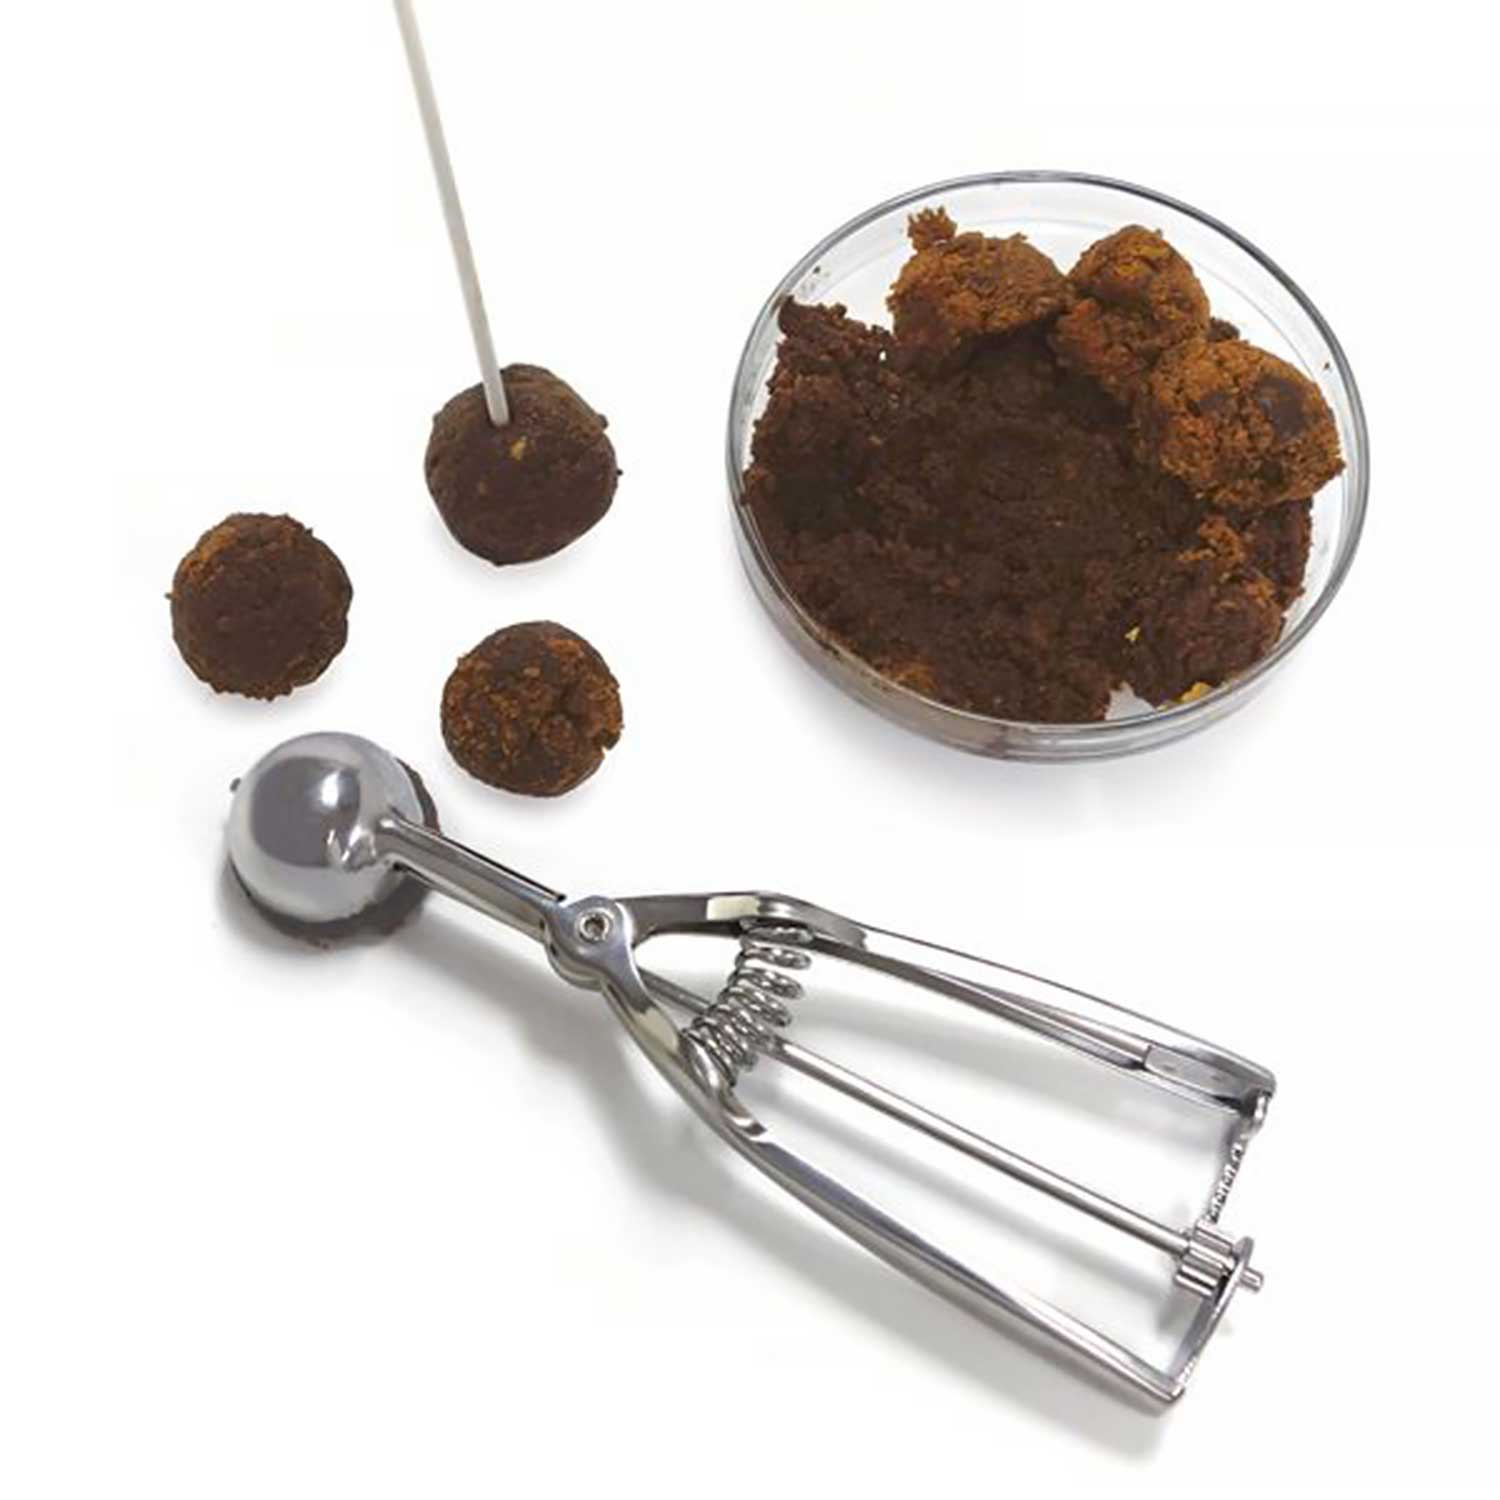 Cookie Scoop - 1 Tablespoon